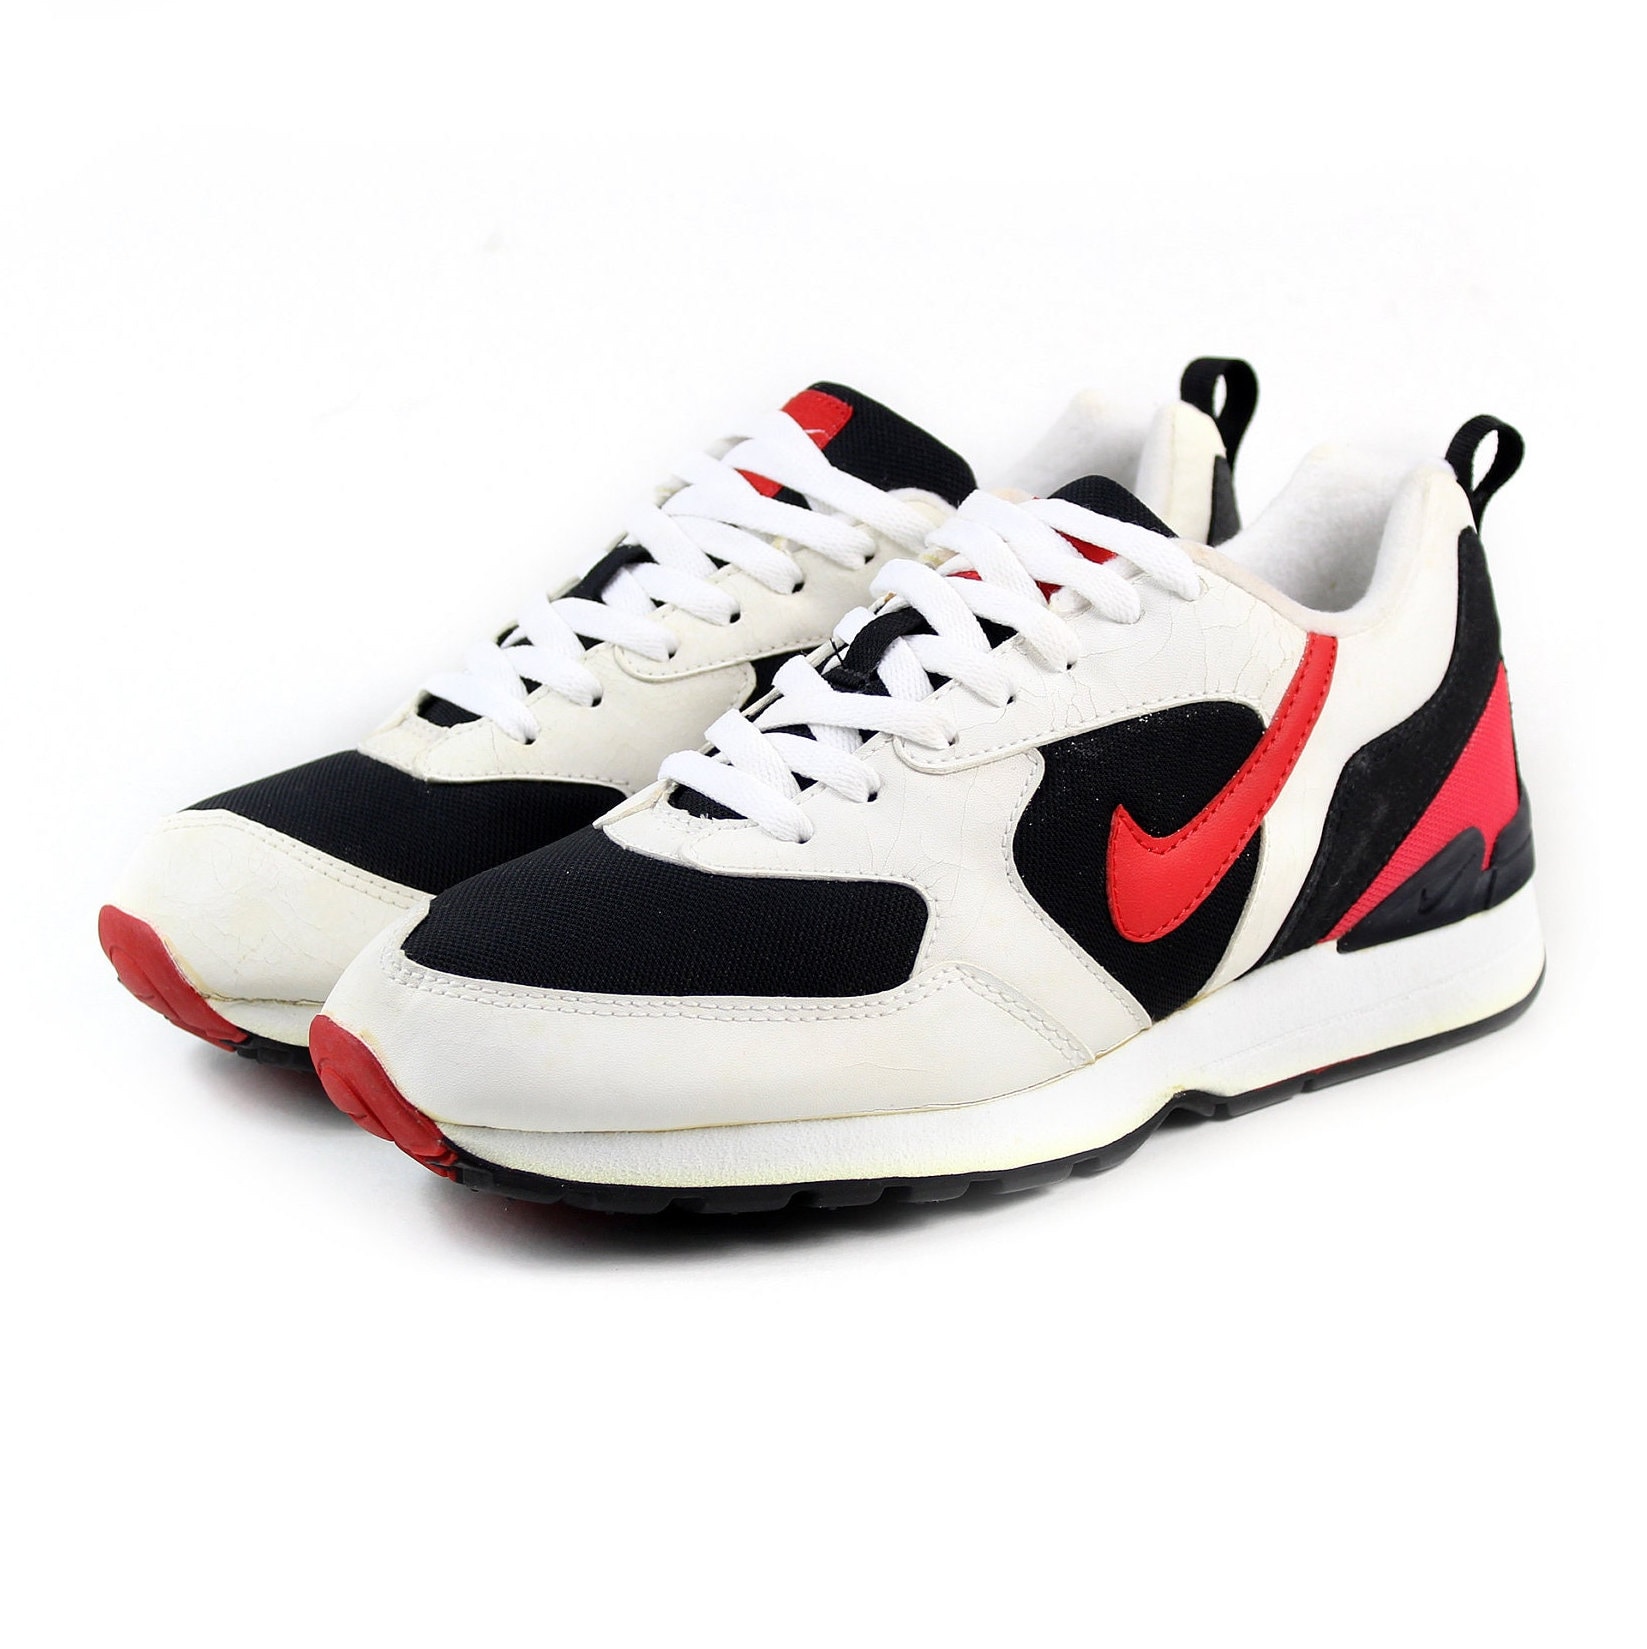 NOS 1995 90s Vintage Nike Pace Runner Sneakers Kicks Shoes - Etsy